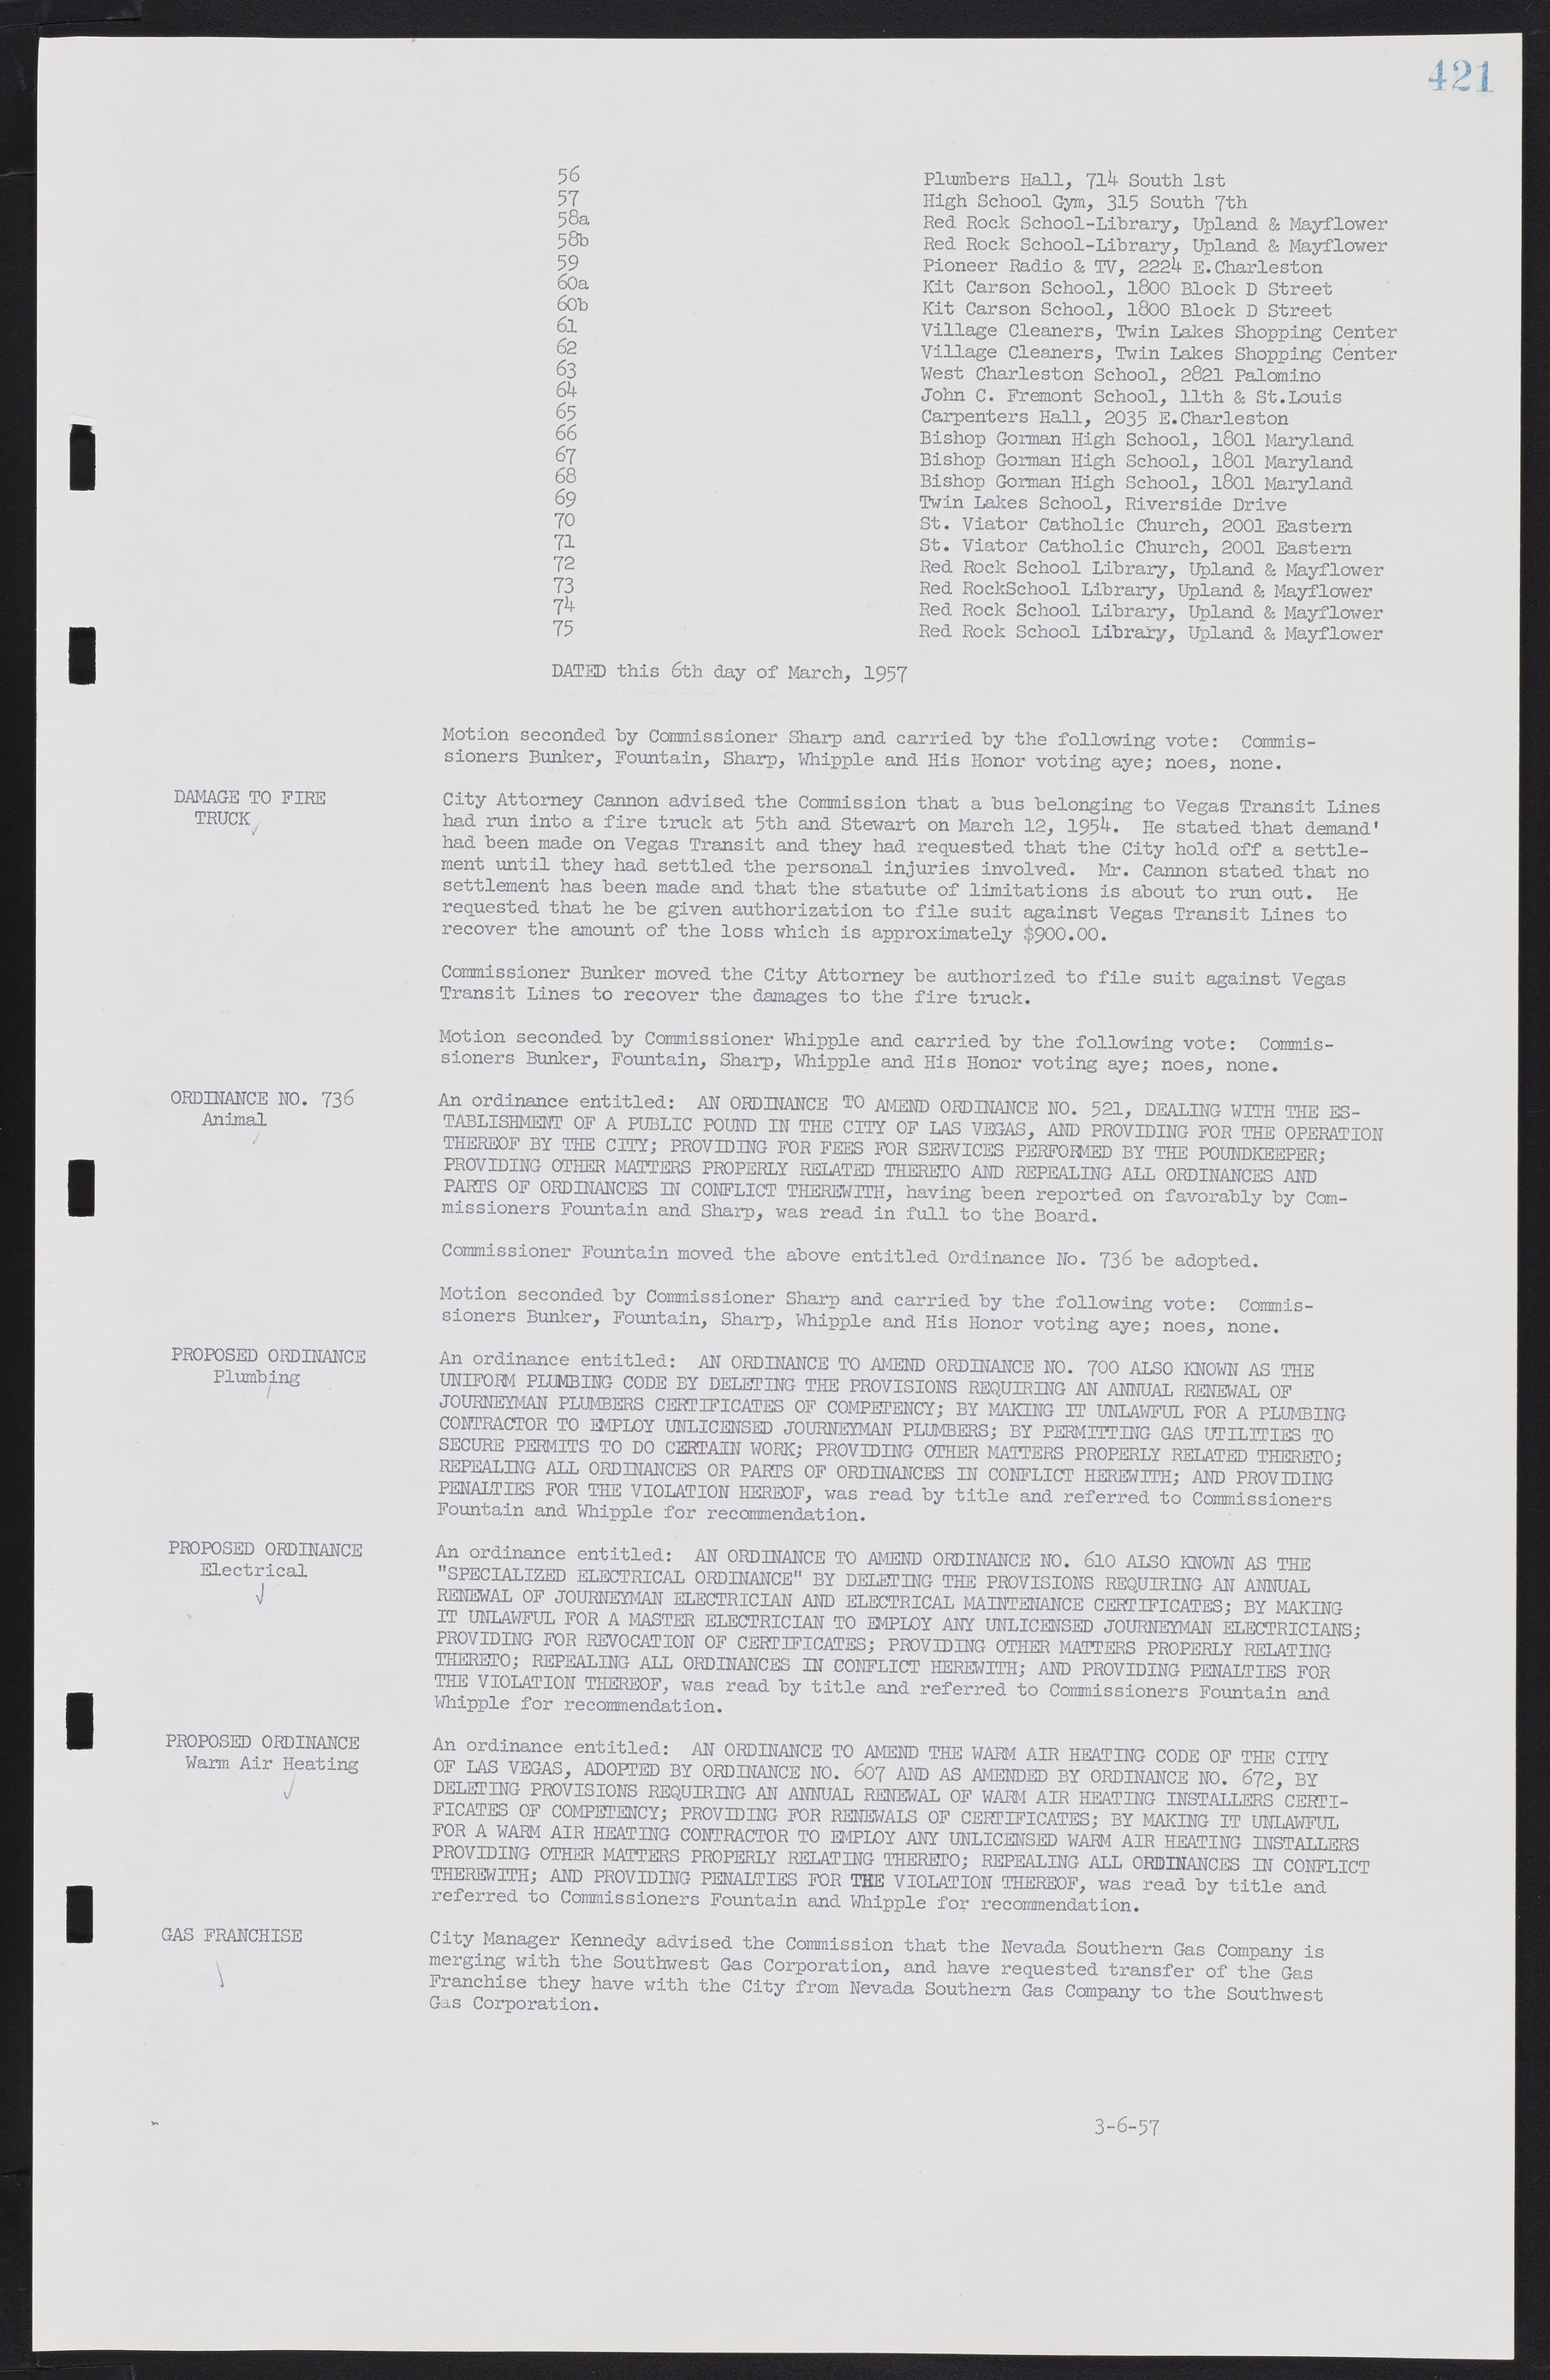 Las Vegas City Commission Minutes, September 21, 1955 to November 20, 1957, lvc000010-441